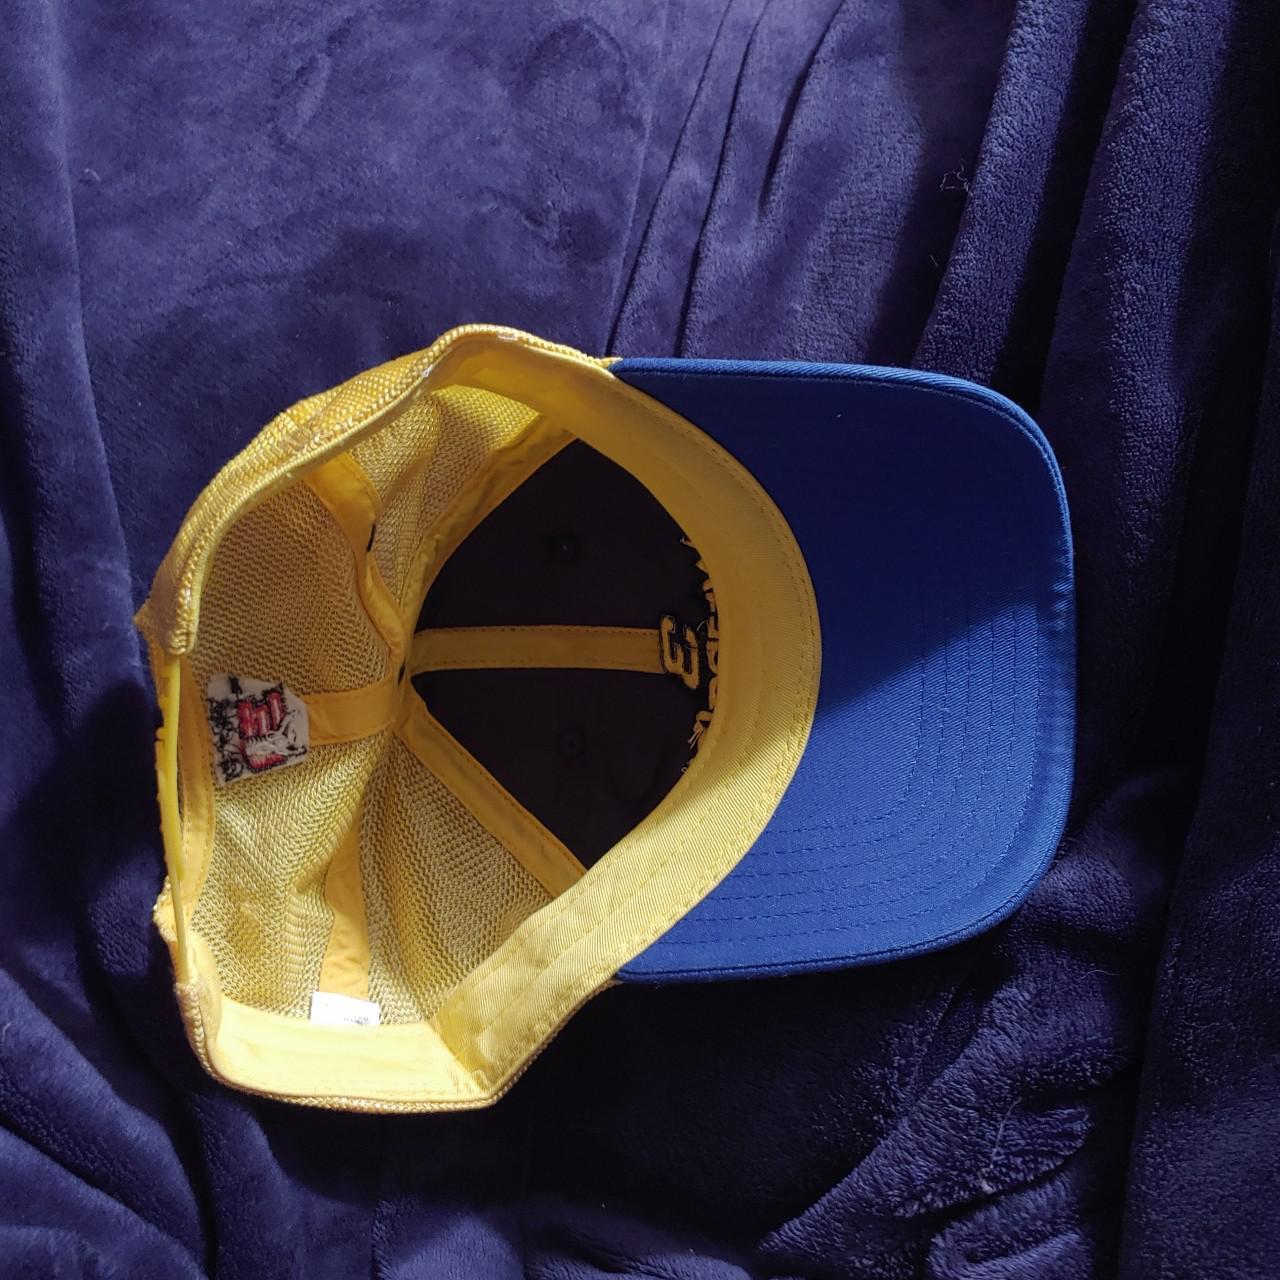 Wrangler Men's Yellow and Blue Hat | Depop